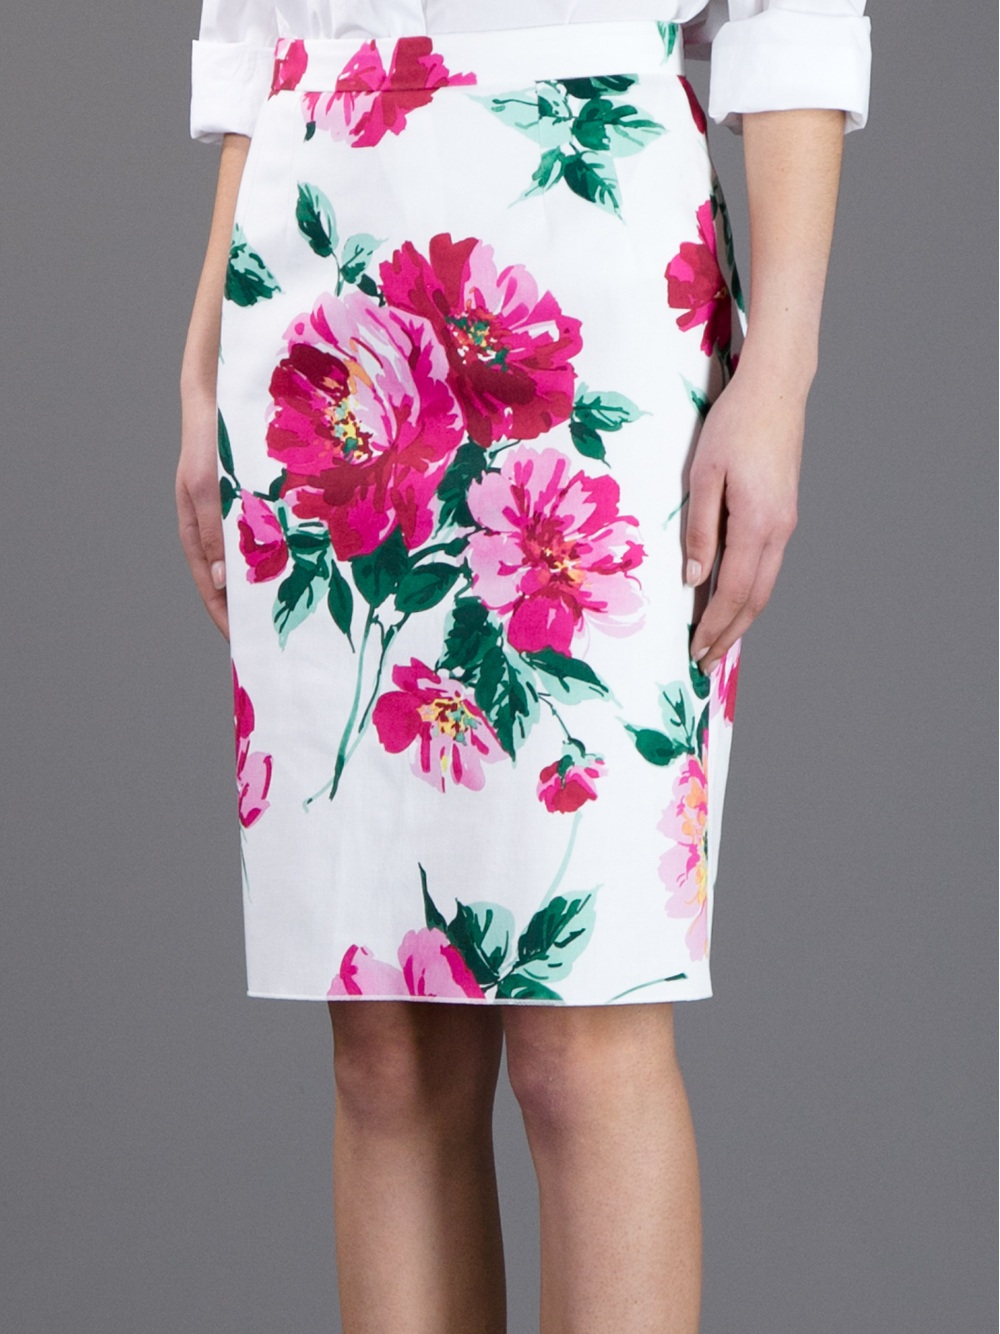 Lyst - Dolce & gabbana Floral Pencil Skirt